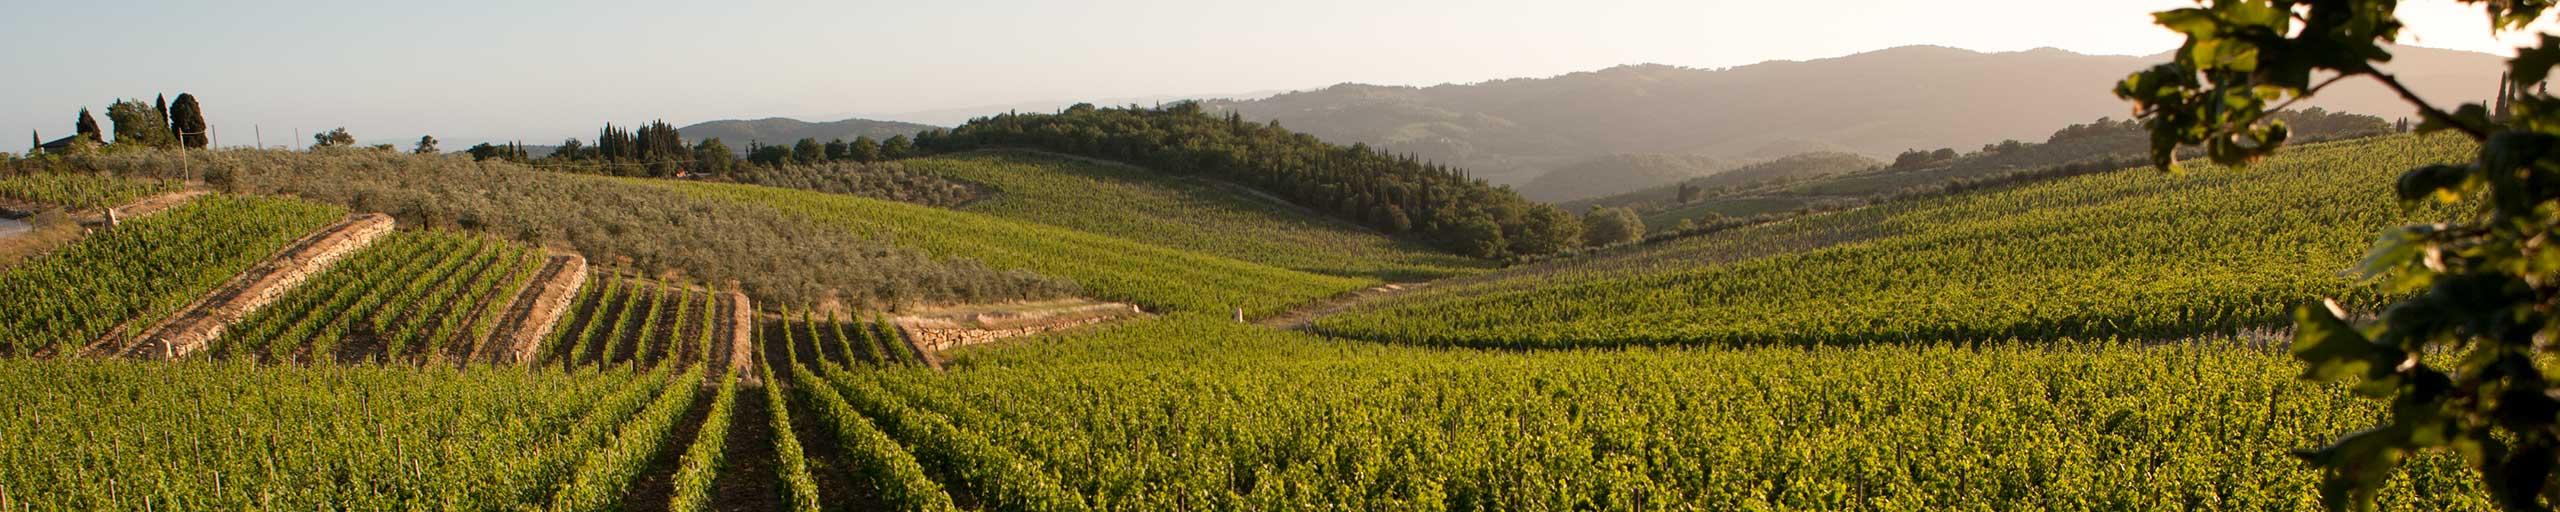 Weinfelder in der Toskana